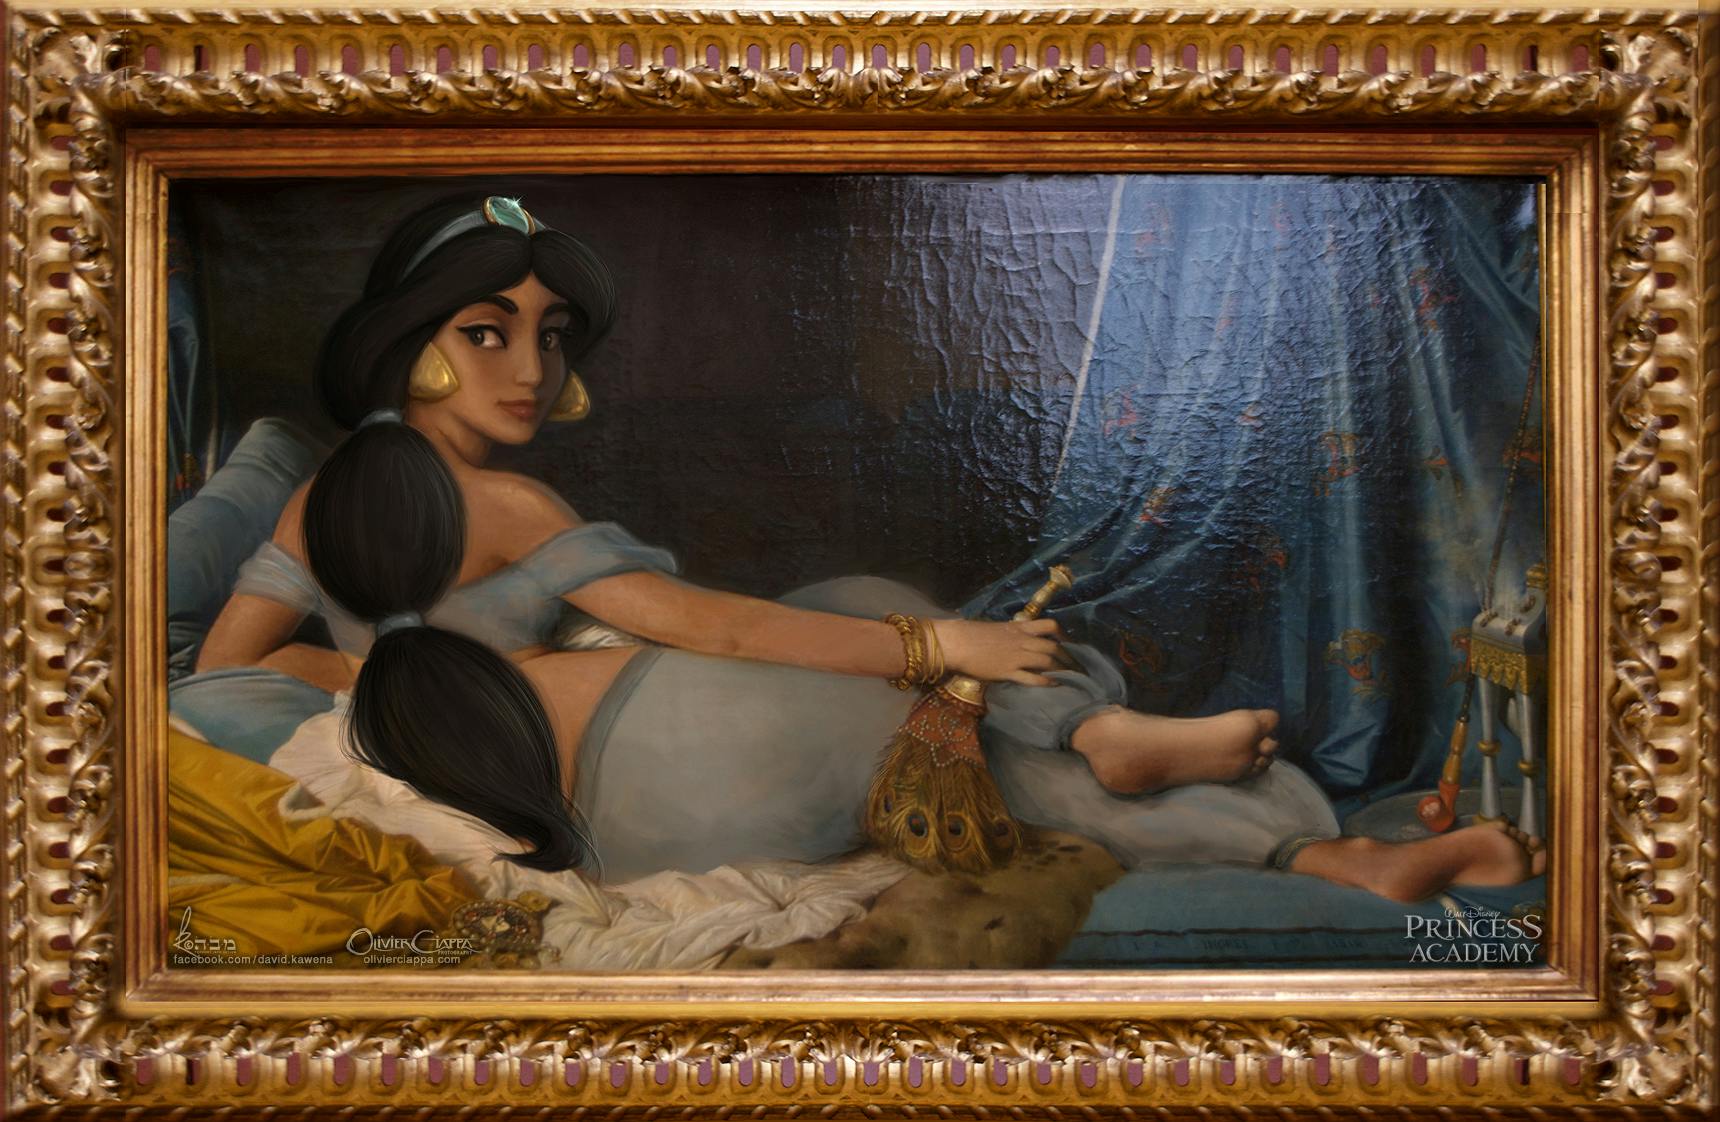 Illustration of Jasmine from Aladdin, inspired by Ingres' Grande Odalisque